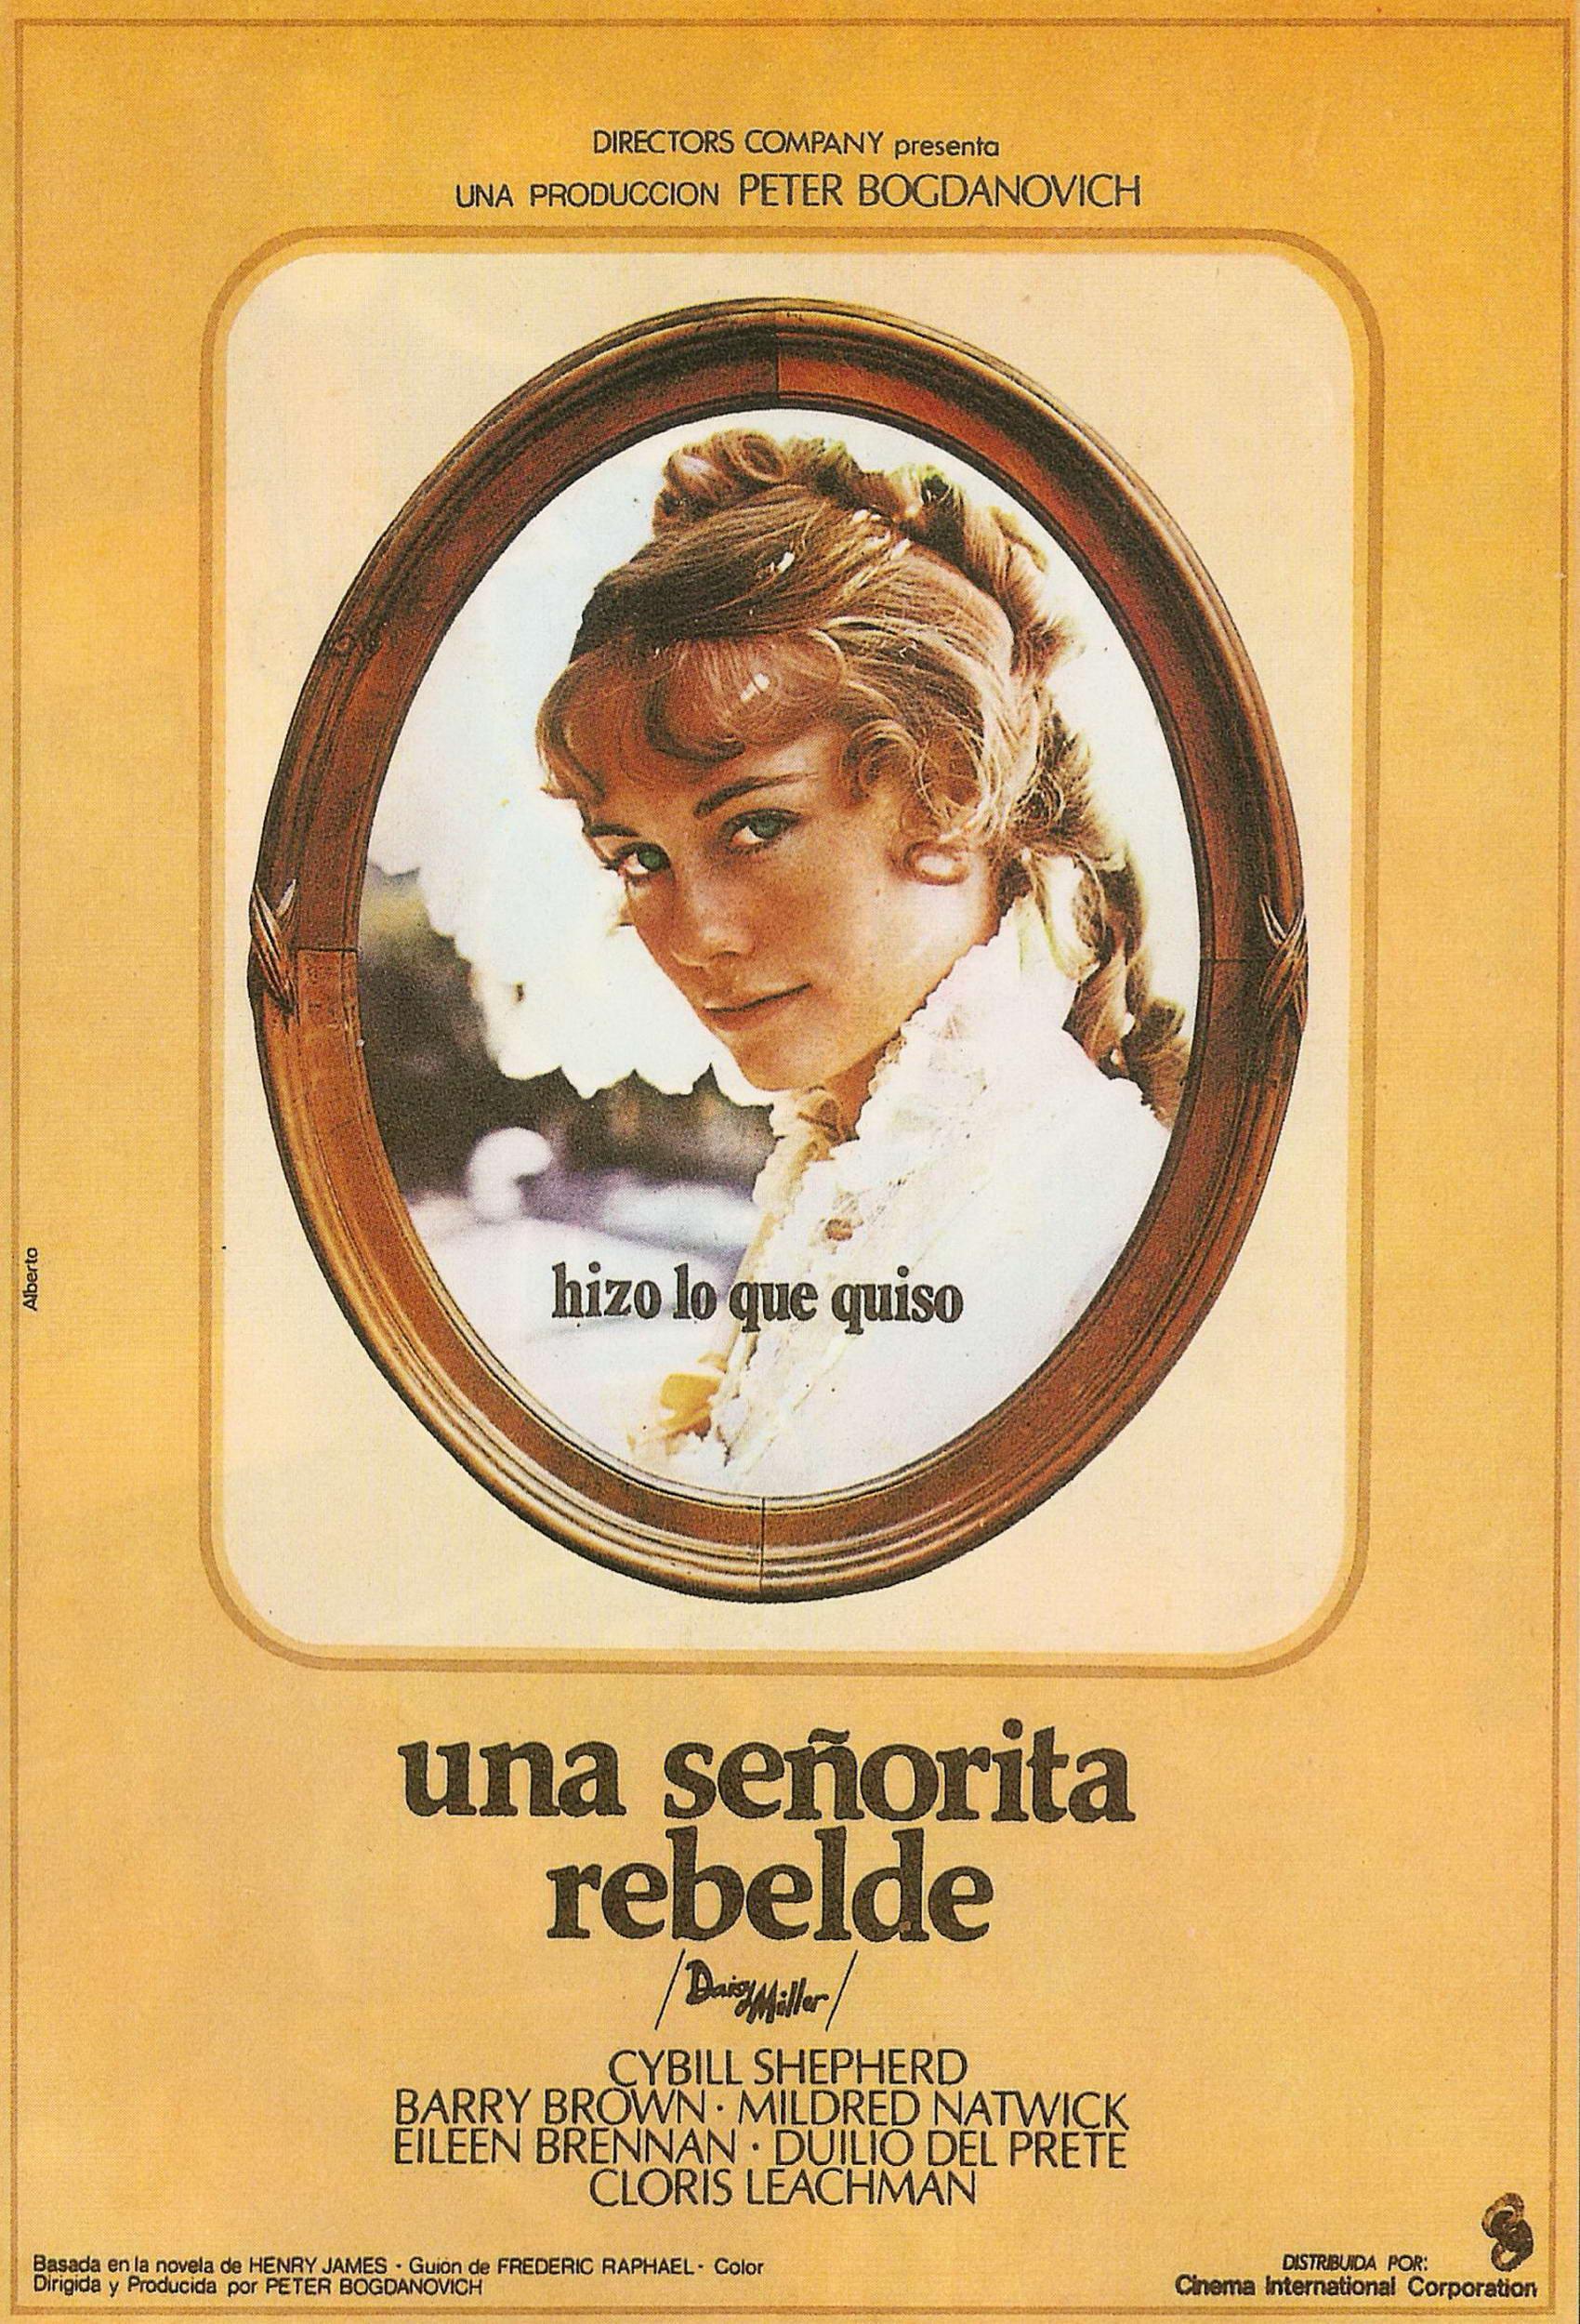 Дейзи миллер. Дейзи Миллер / Daisy Miller 1974 постеры. Сибилл Шепард в Дейзи Миллер.